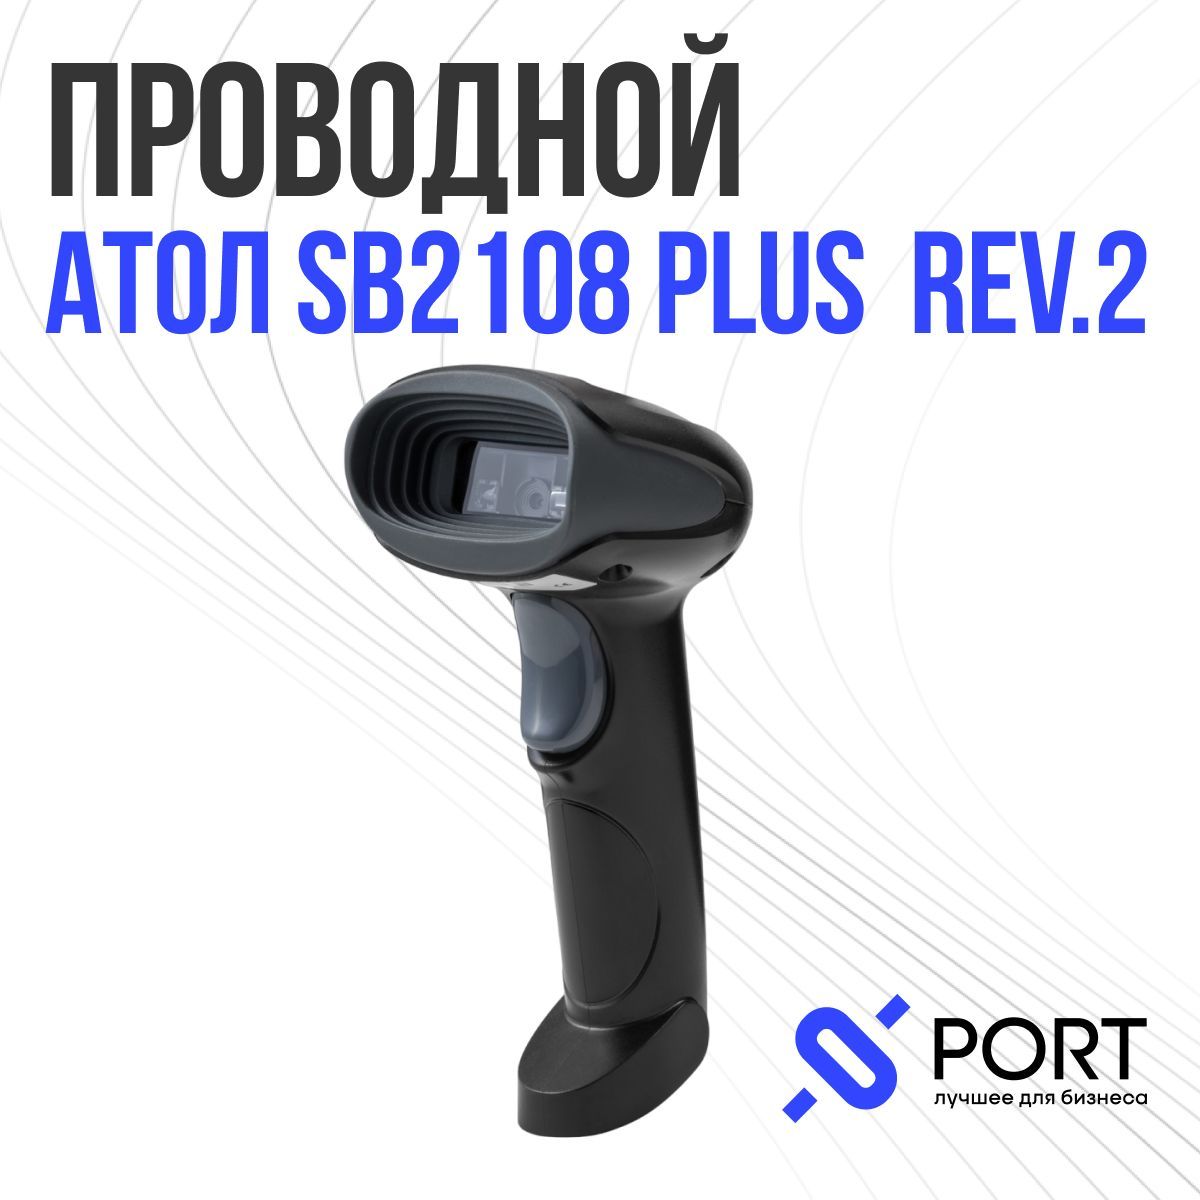 Sb2108 plus настройка. Сканер Атол sb2108 Plus. Сканер штрих-кода SB 2108. Сканер штрих-кода 2d Атол sb2108 Plus. Атол sb2108 Plus Rev.2.